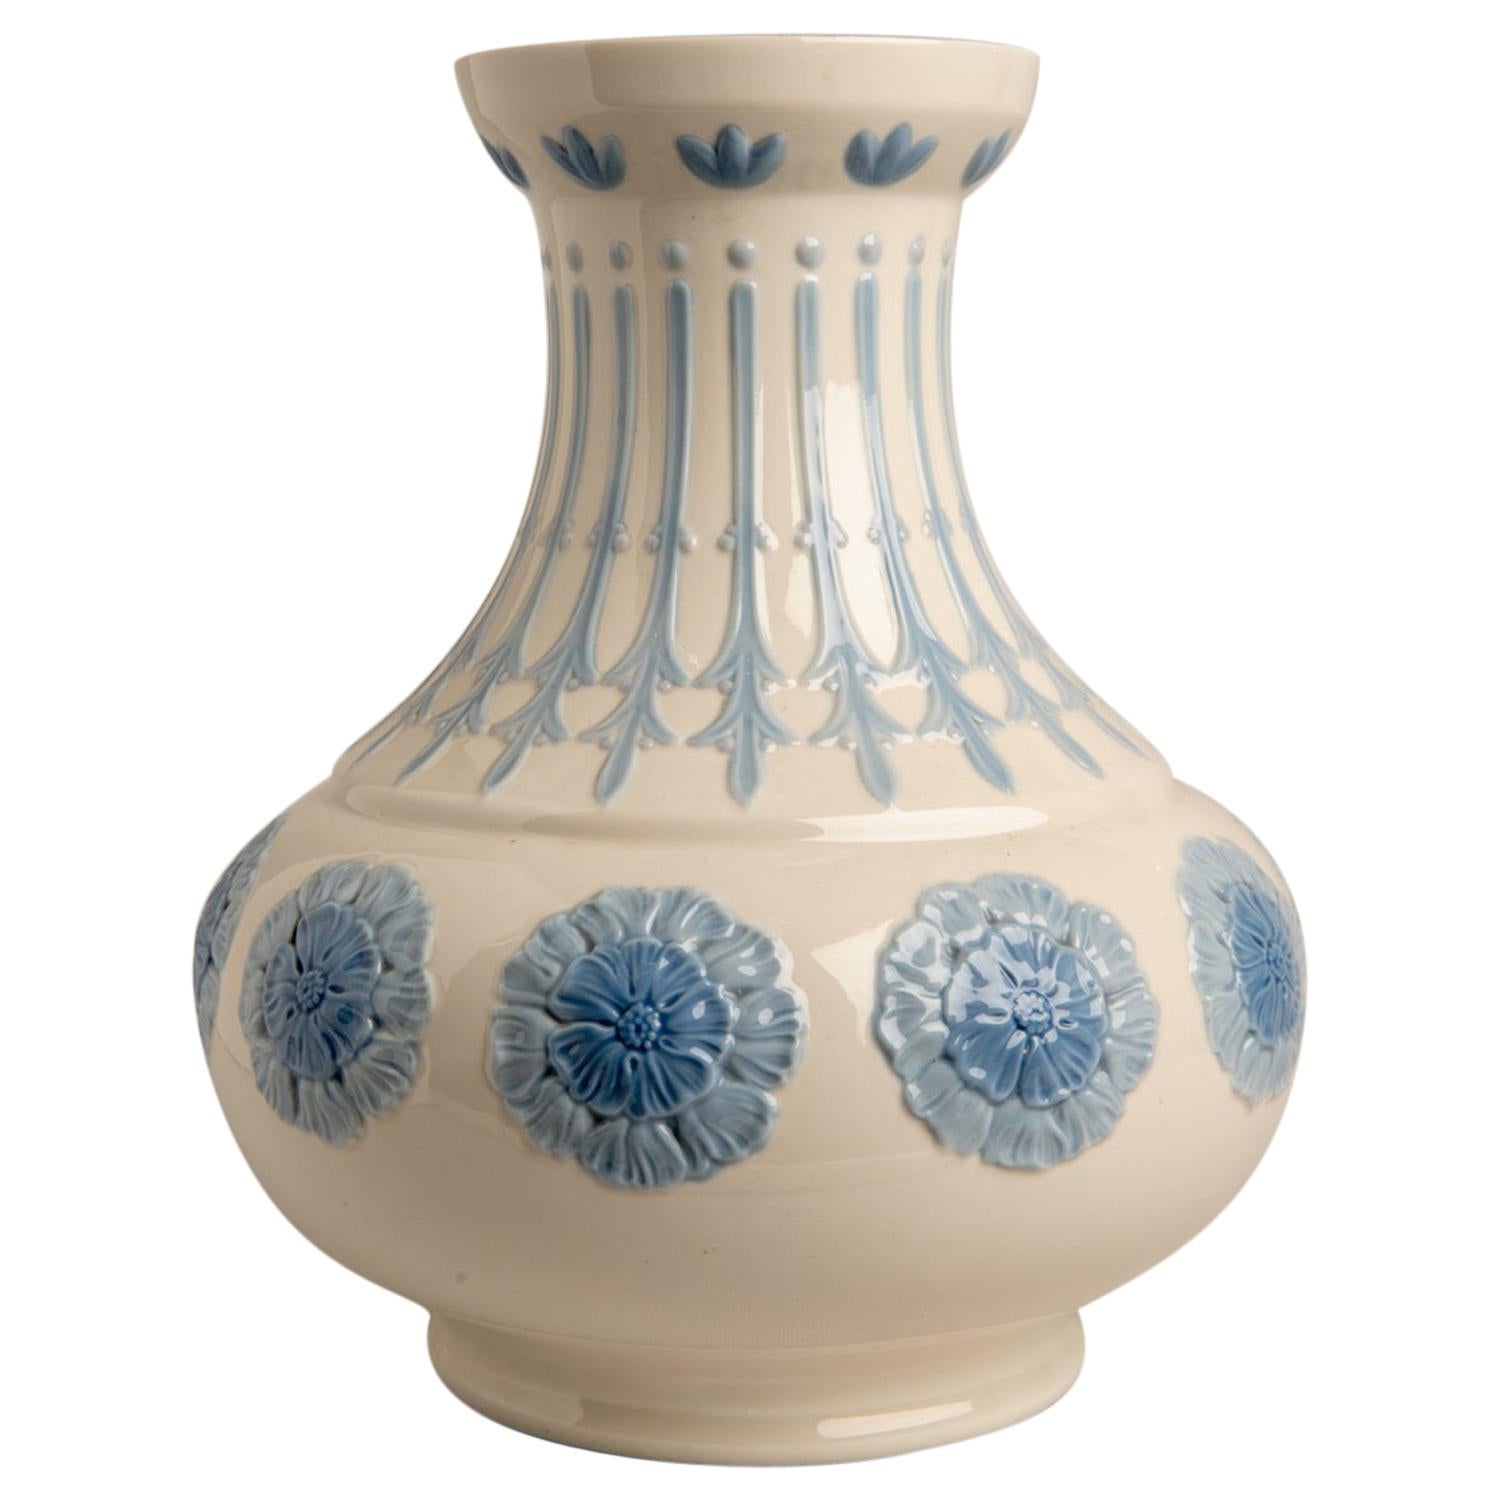  Spanische Keramikvase aus spanischer Keramik